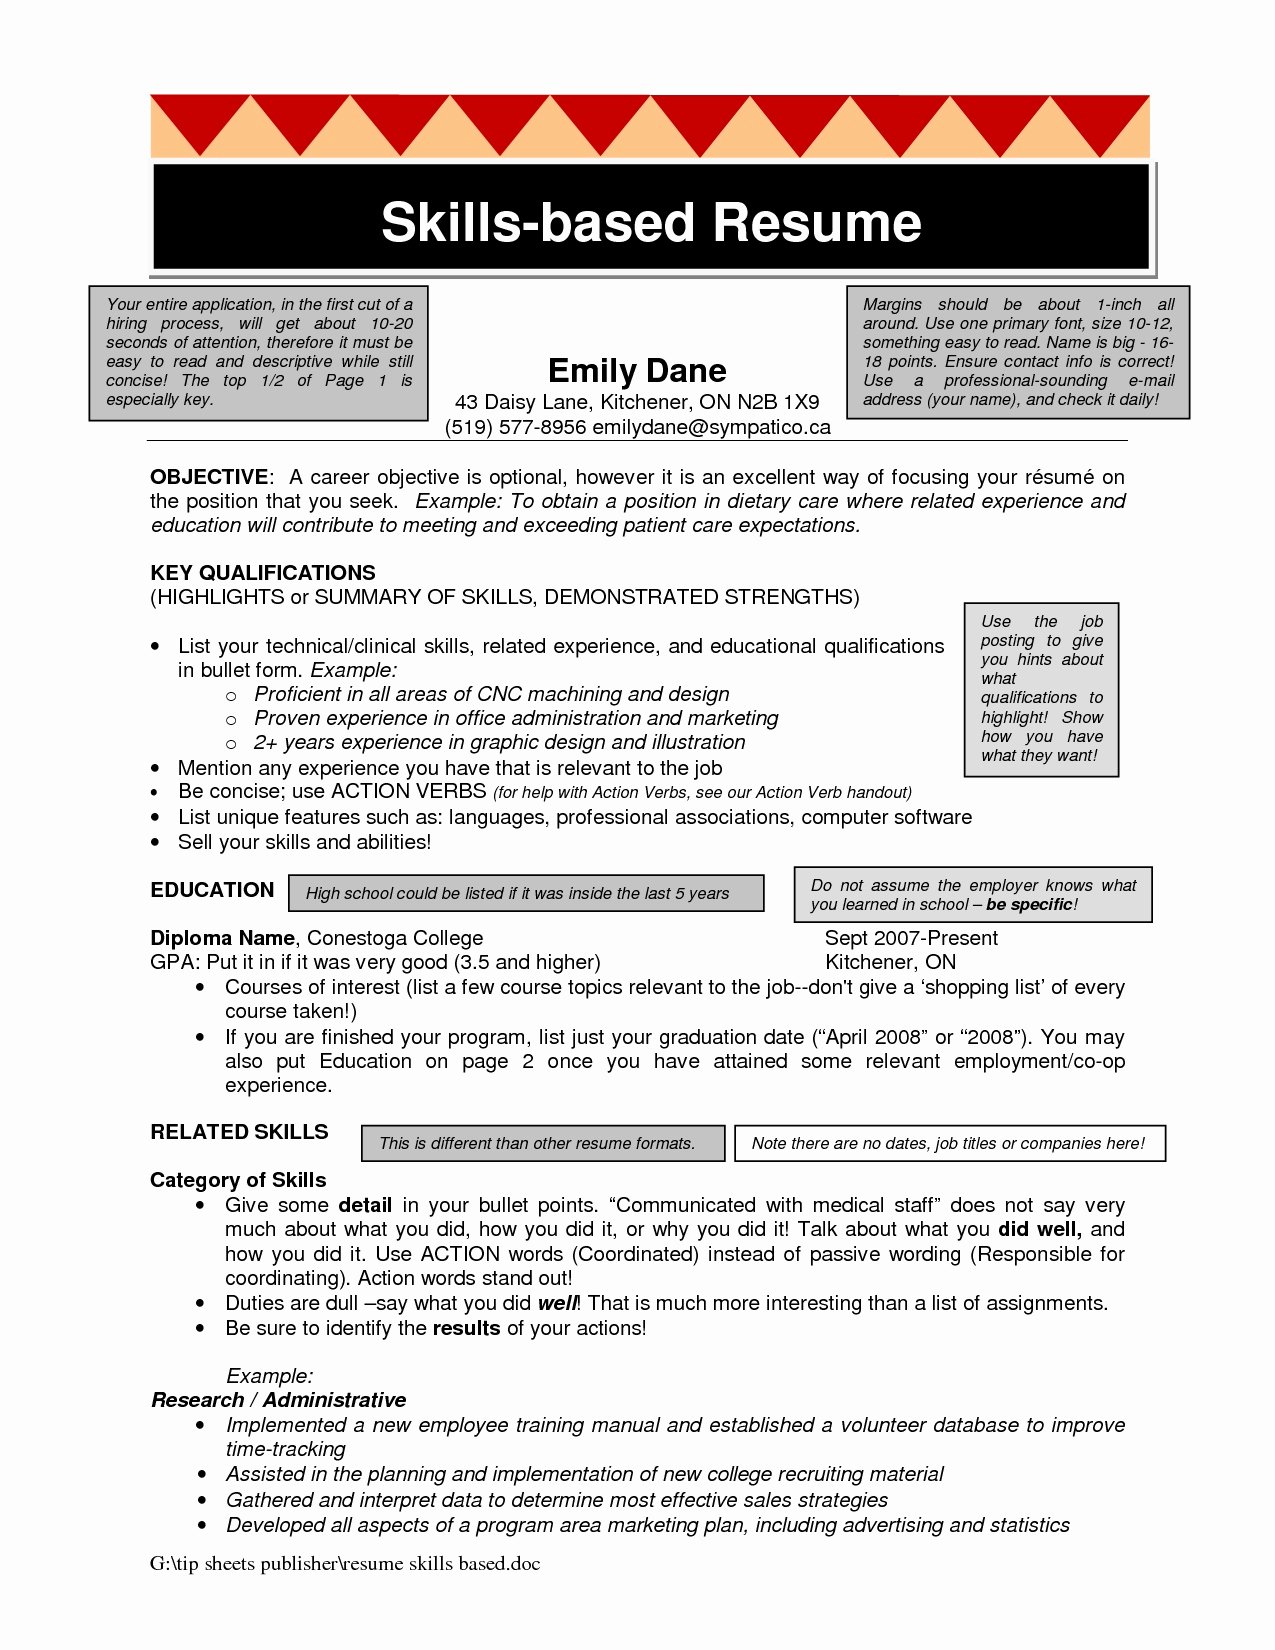 Skills Based Resume Templates Skills for Resume Resume